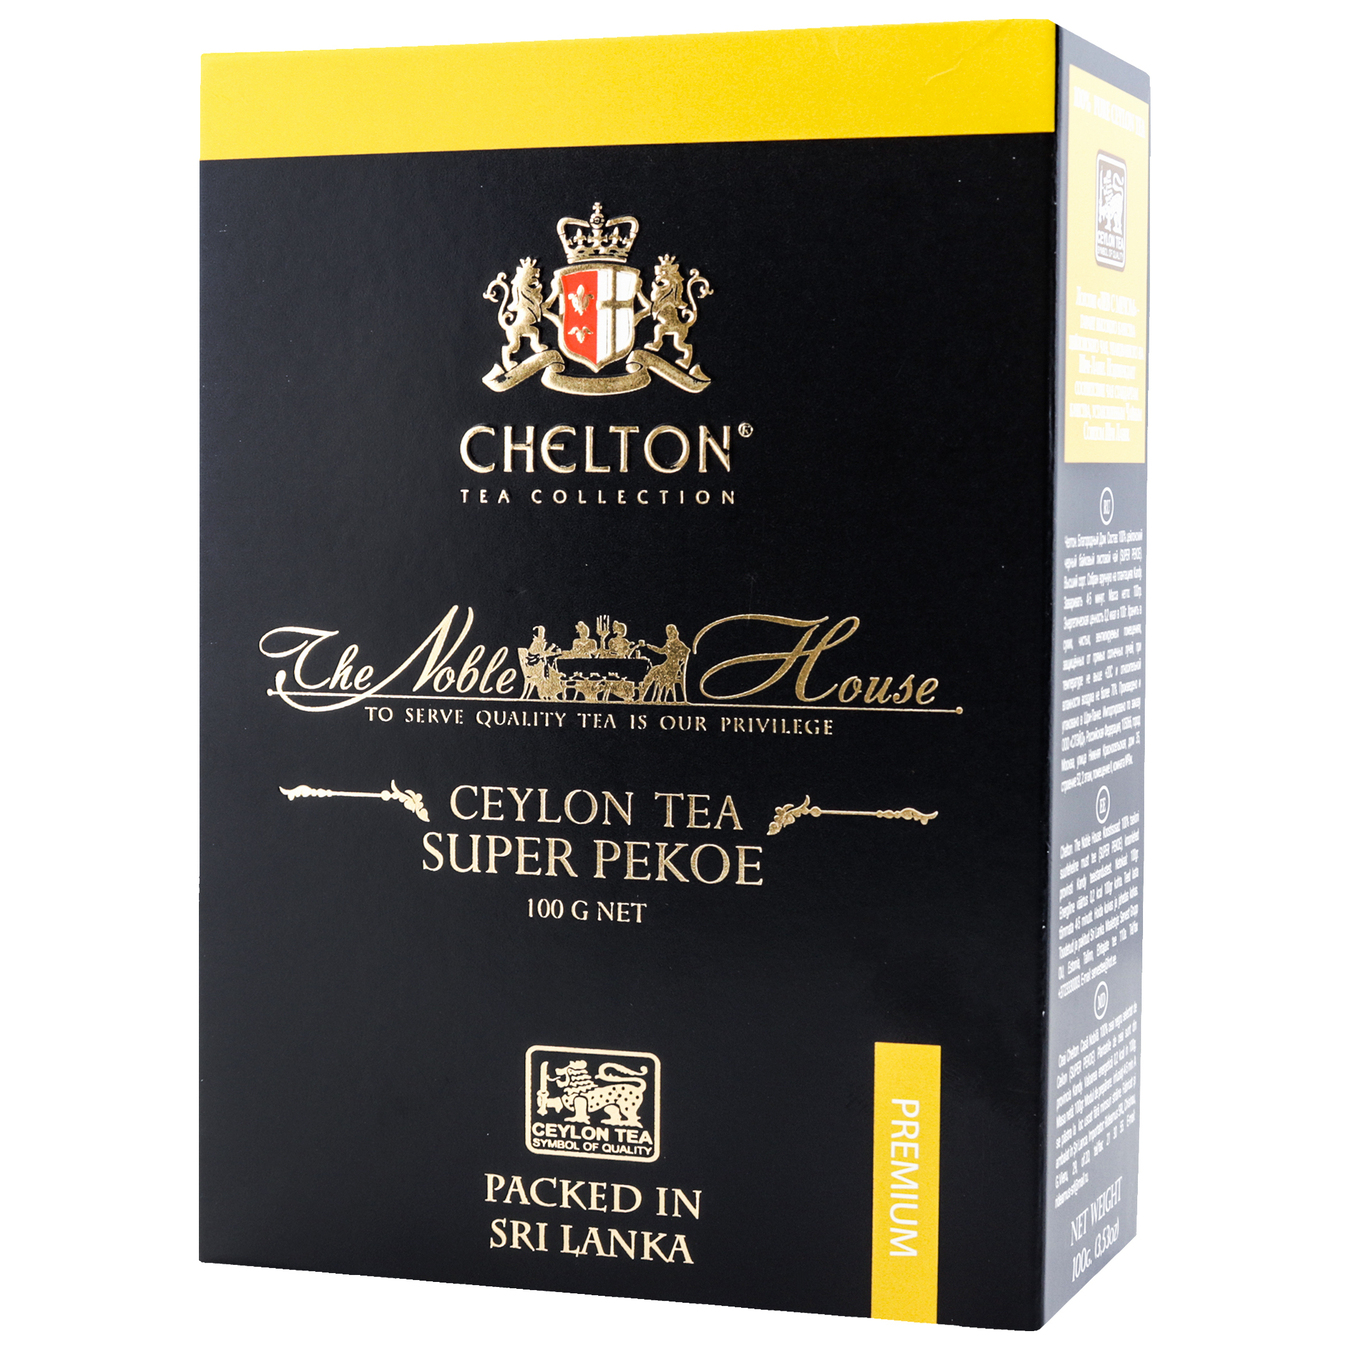 Чай Chelton The Noble House Super Pekoe черный цейлонский листовой 100г